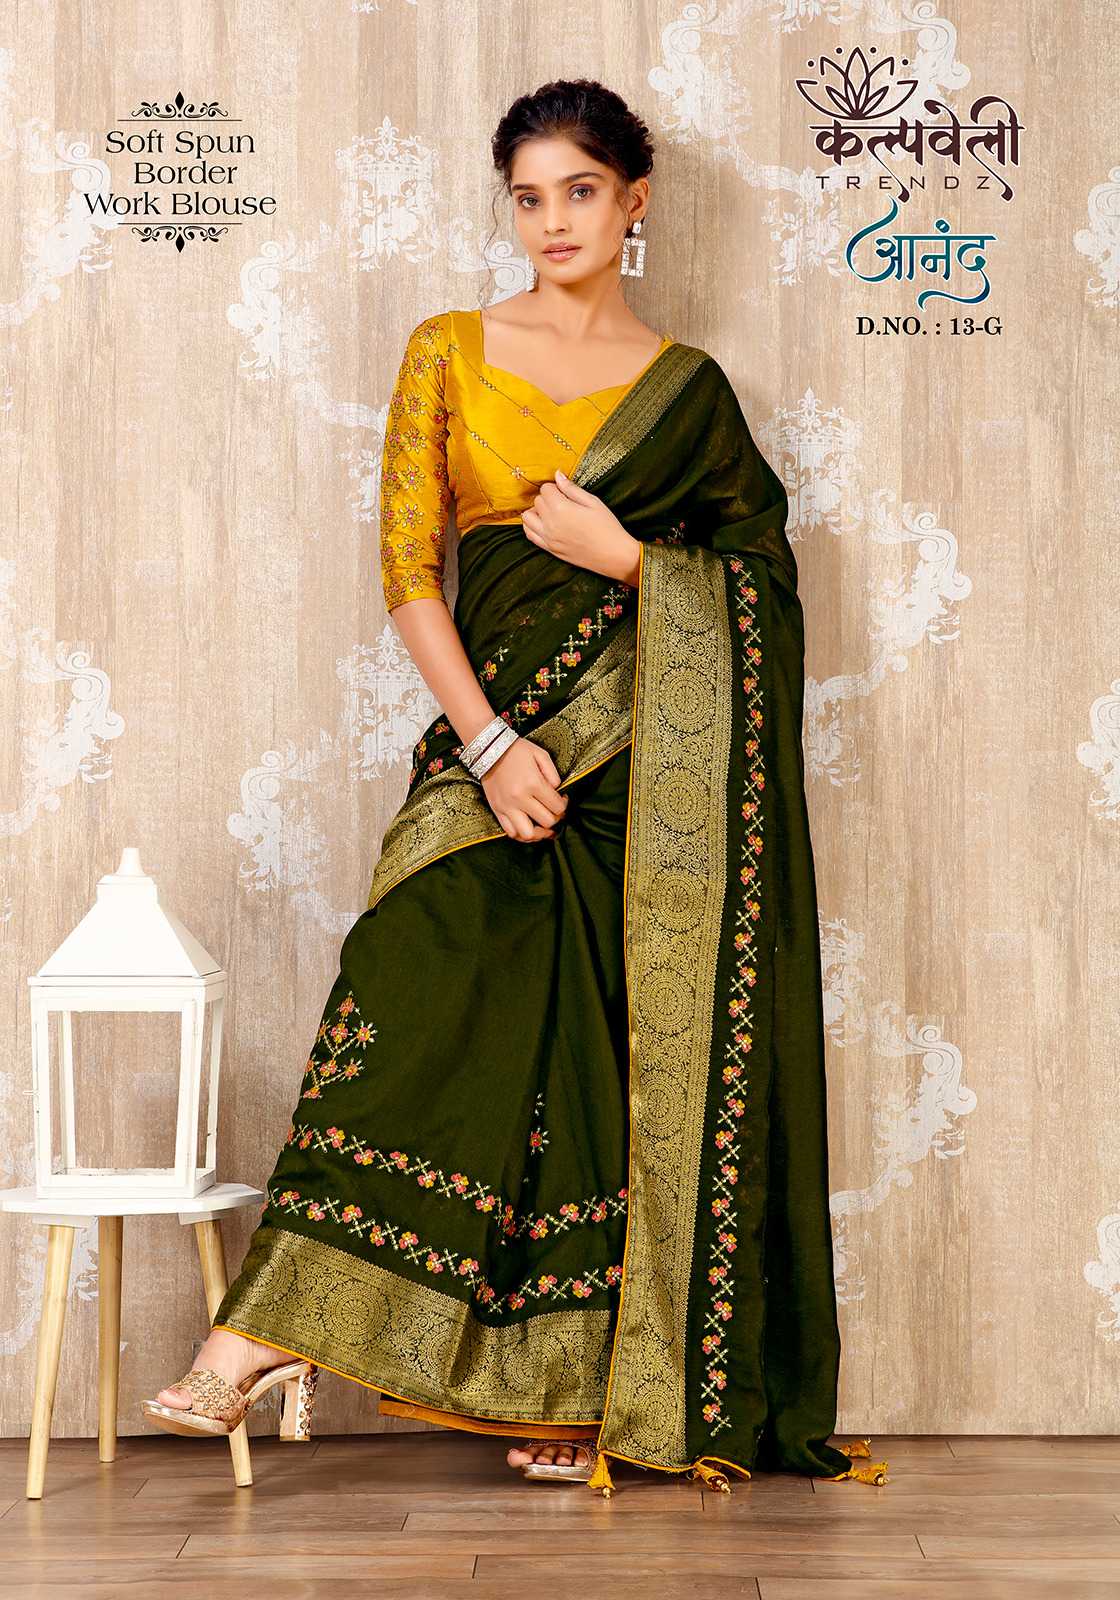 kalpavelly trendz anand 13 amazing design soft spun sarees collection